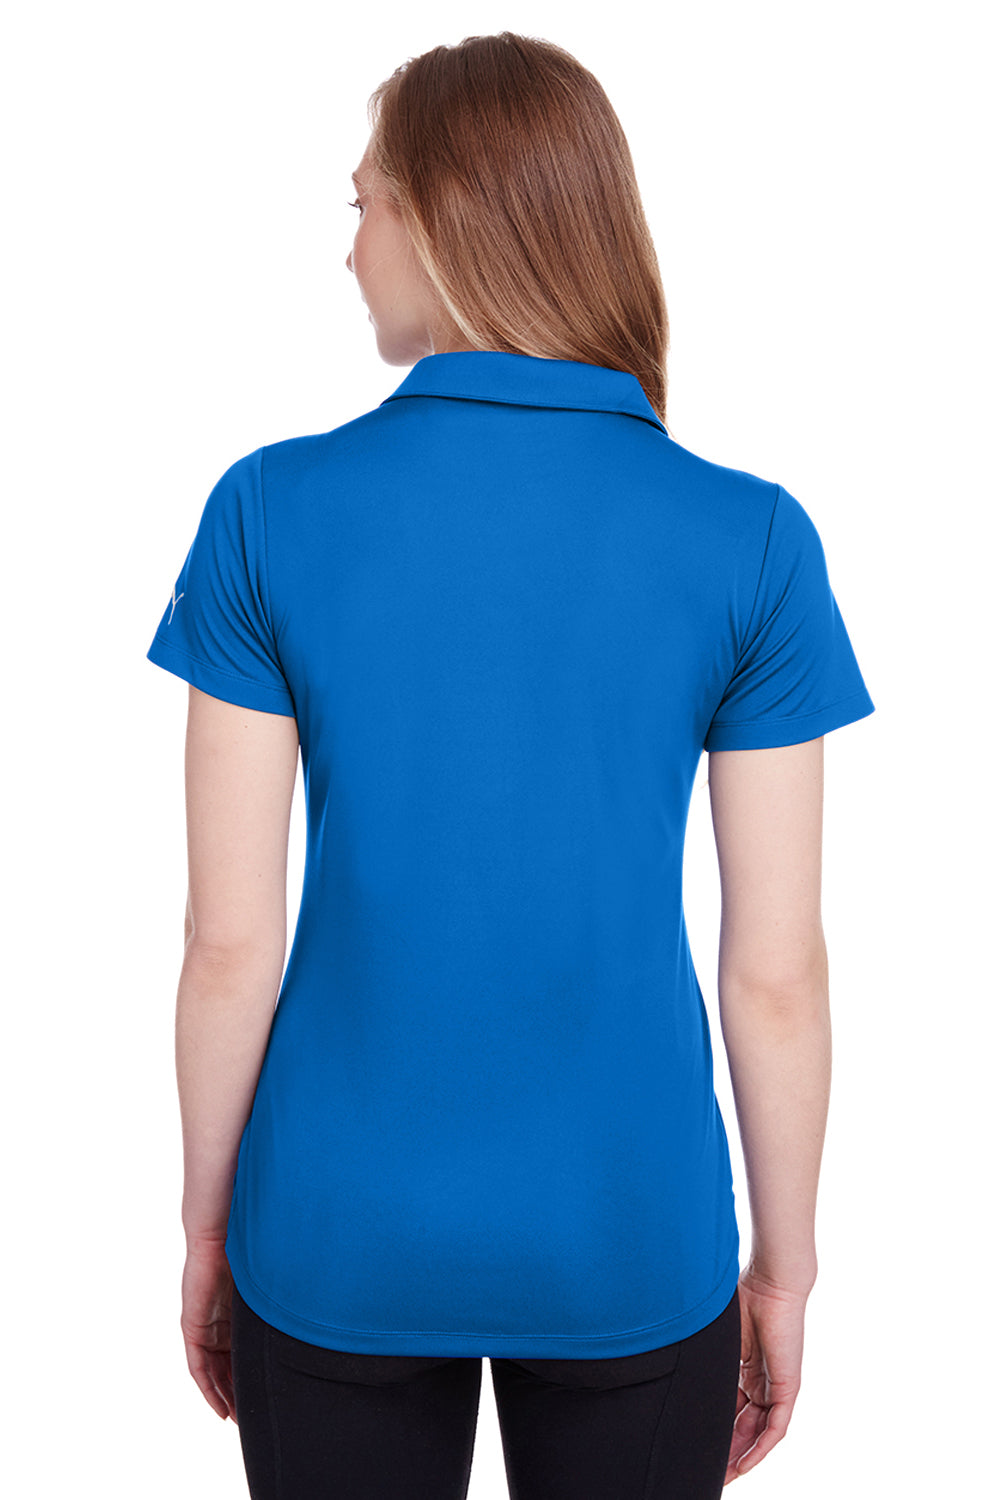 Puma 596800 Womens Icon Performance Moisture Wicking Short Sleeve Polo Shirt Royal Blue Back